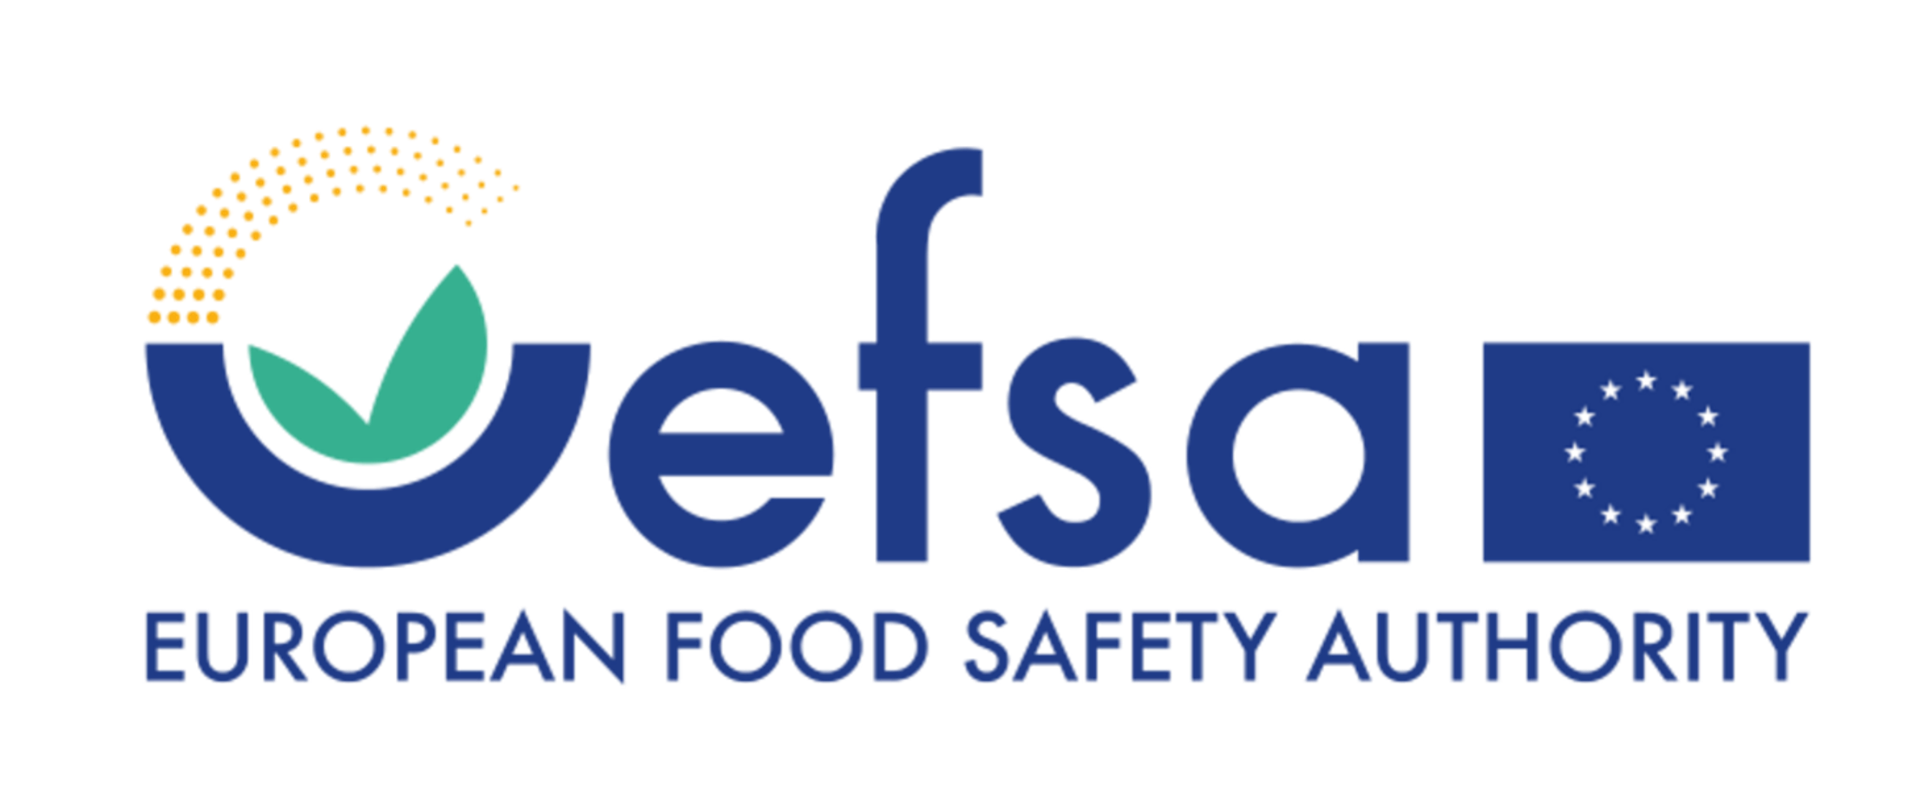 niebieski napis efsa EUROPEAN FOOD SAFETY AUTHORITY